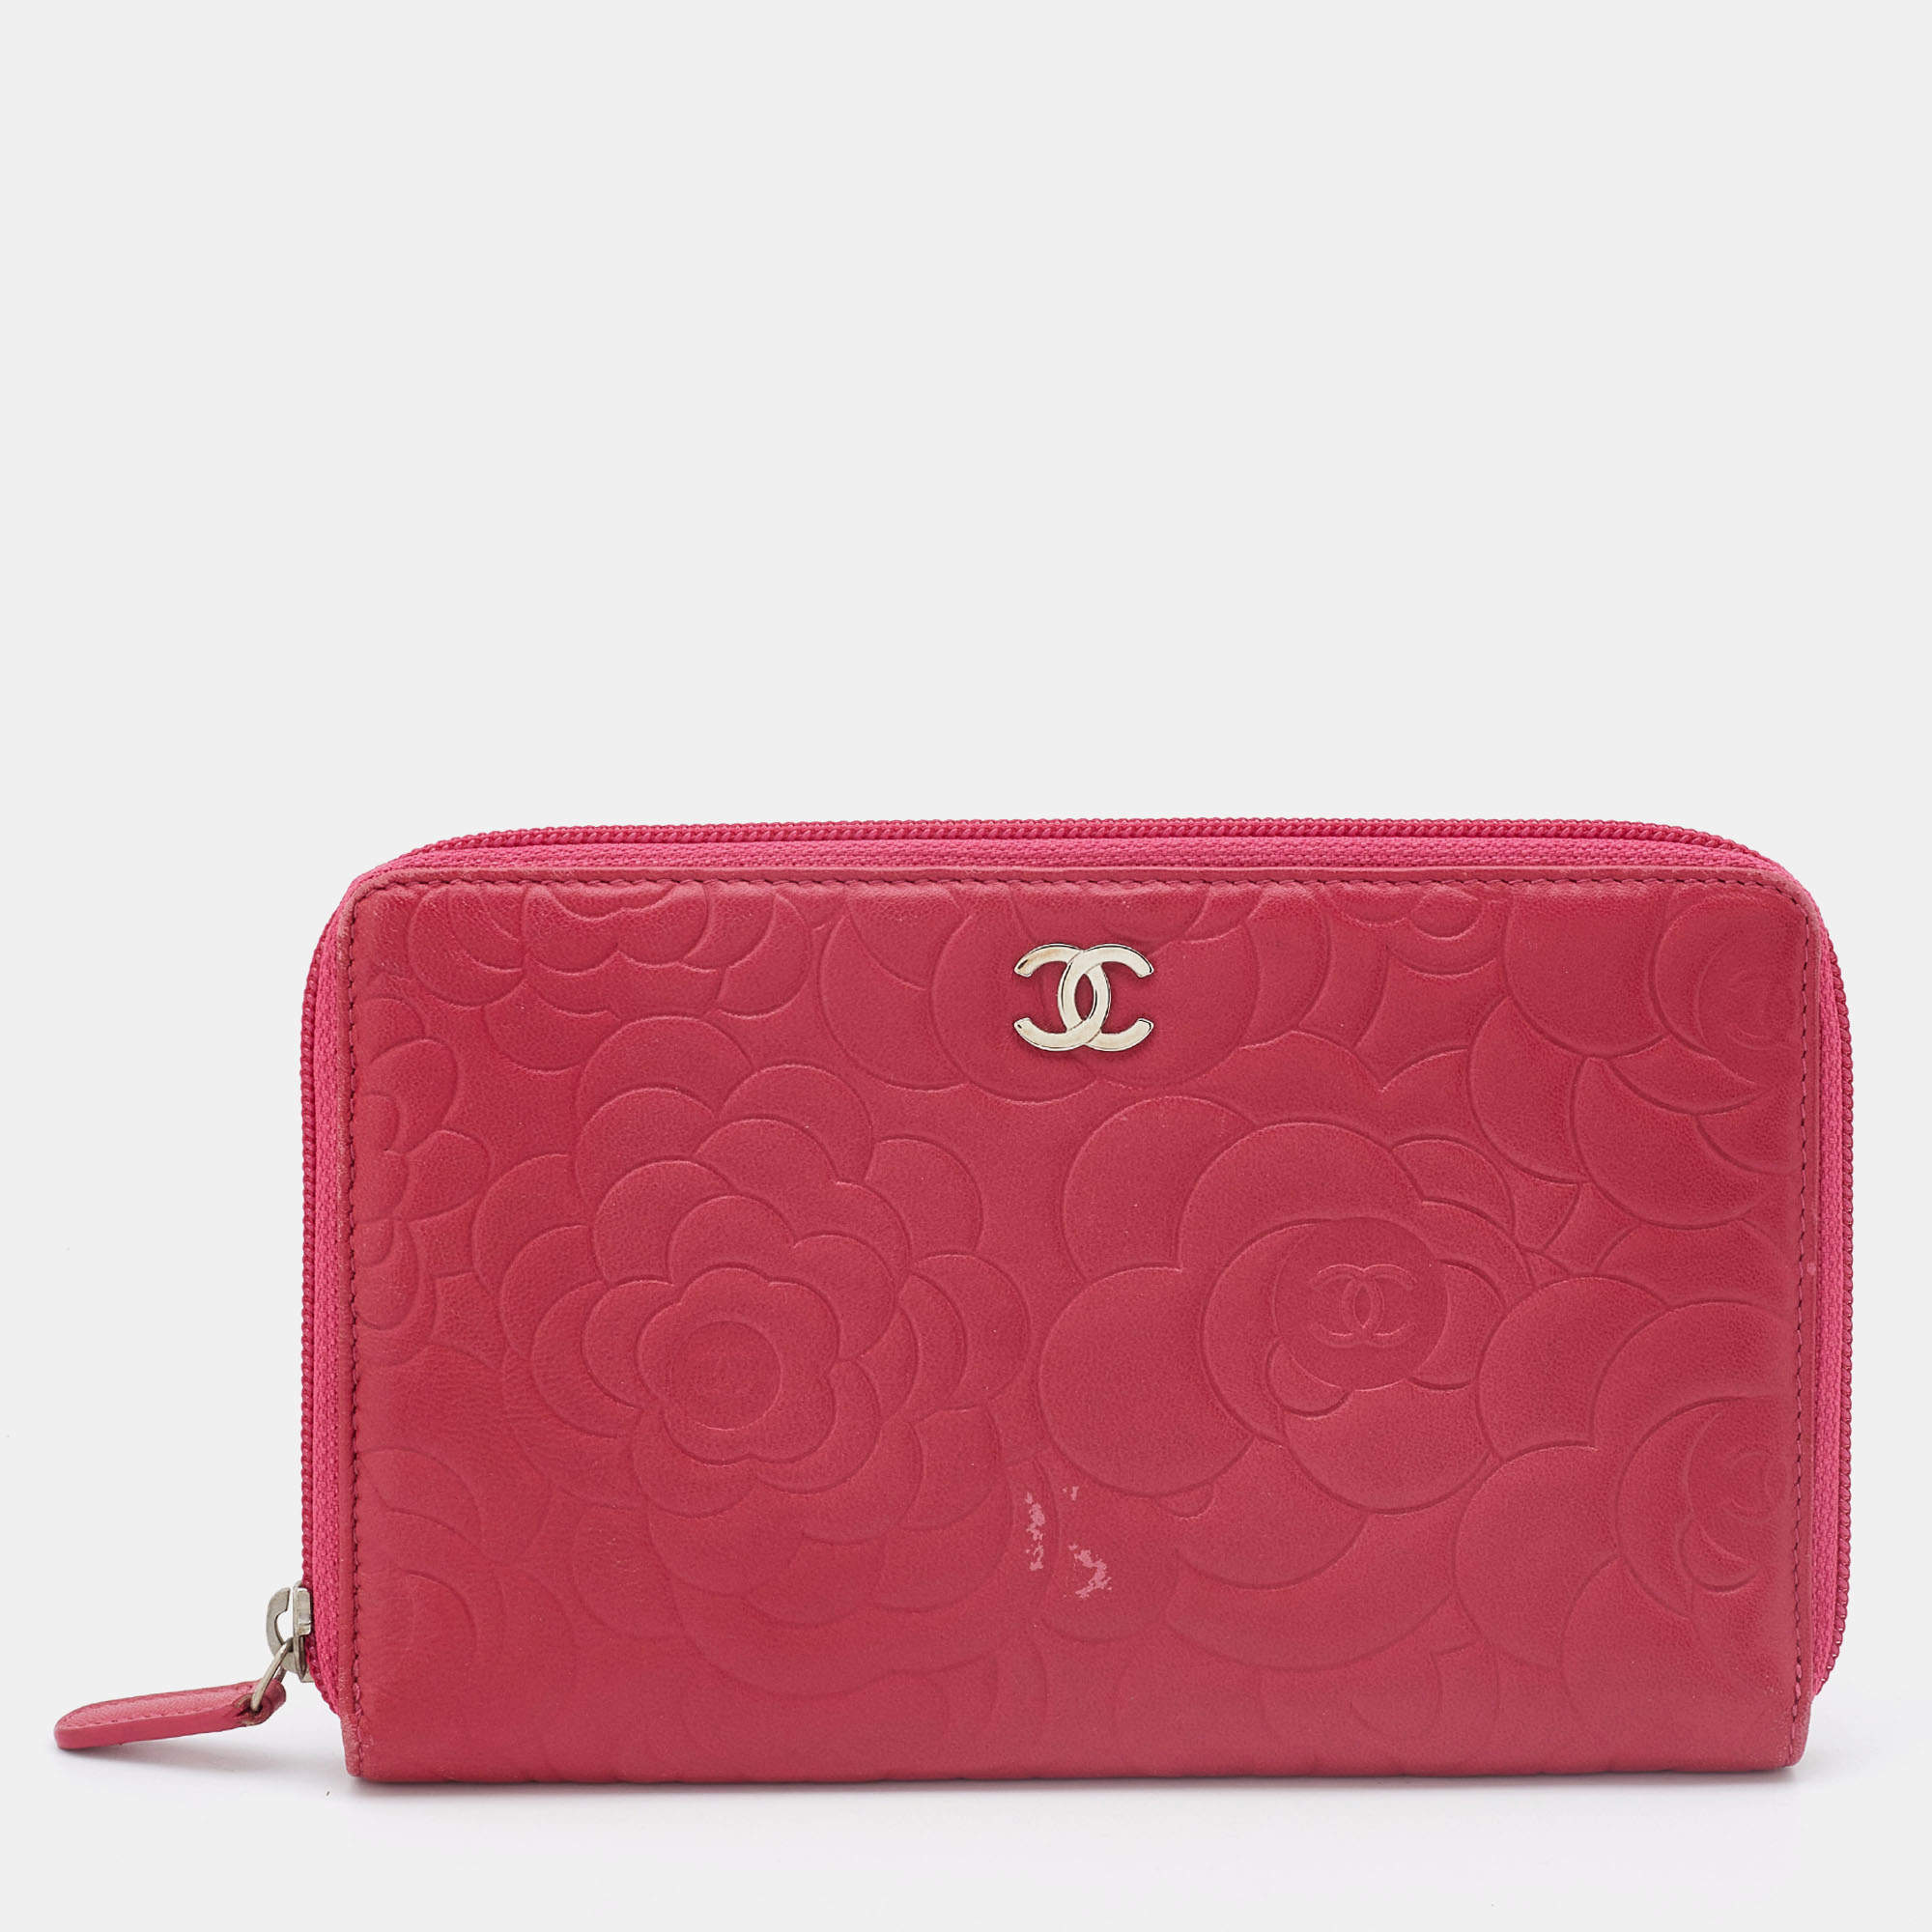 Chanel Pink Leather CC Camellia Zip Around Wallet Organizer